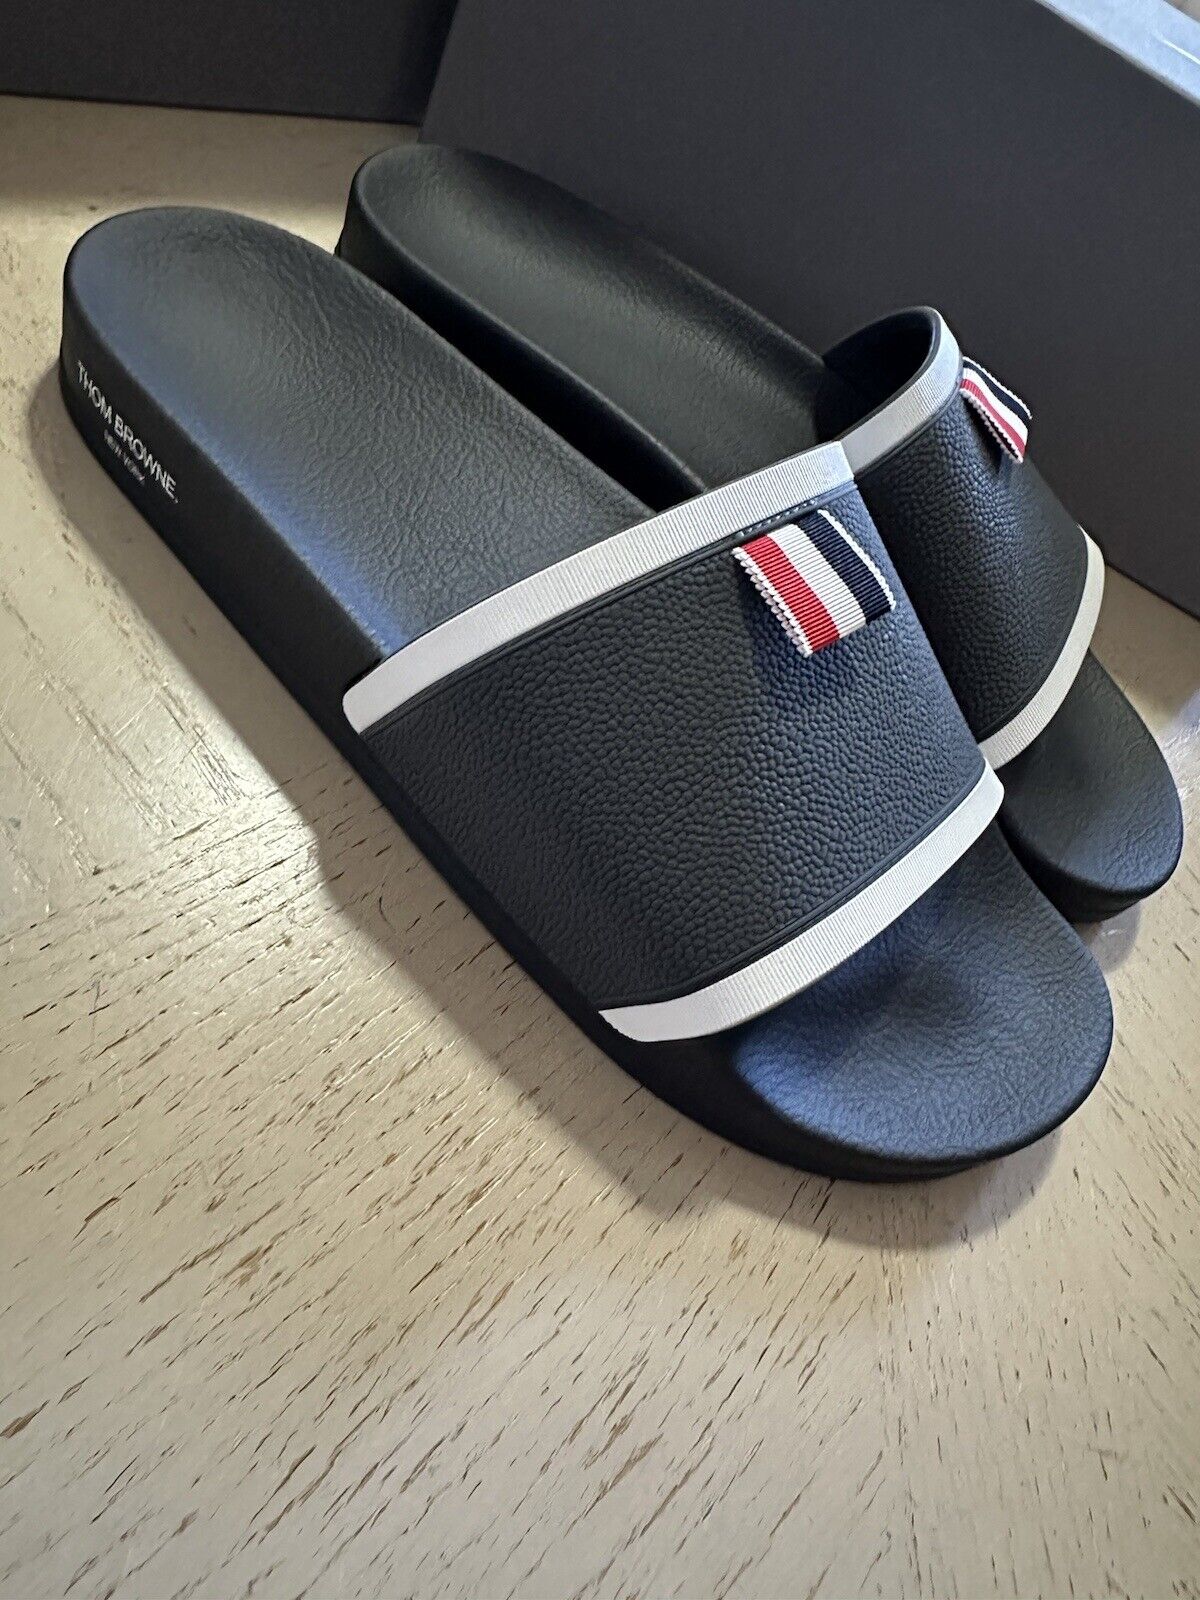 NIB Thom Browne  Logo Slides Sandal Dark Gray Size 8 US/41 Eu Italy